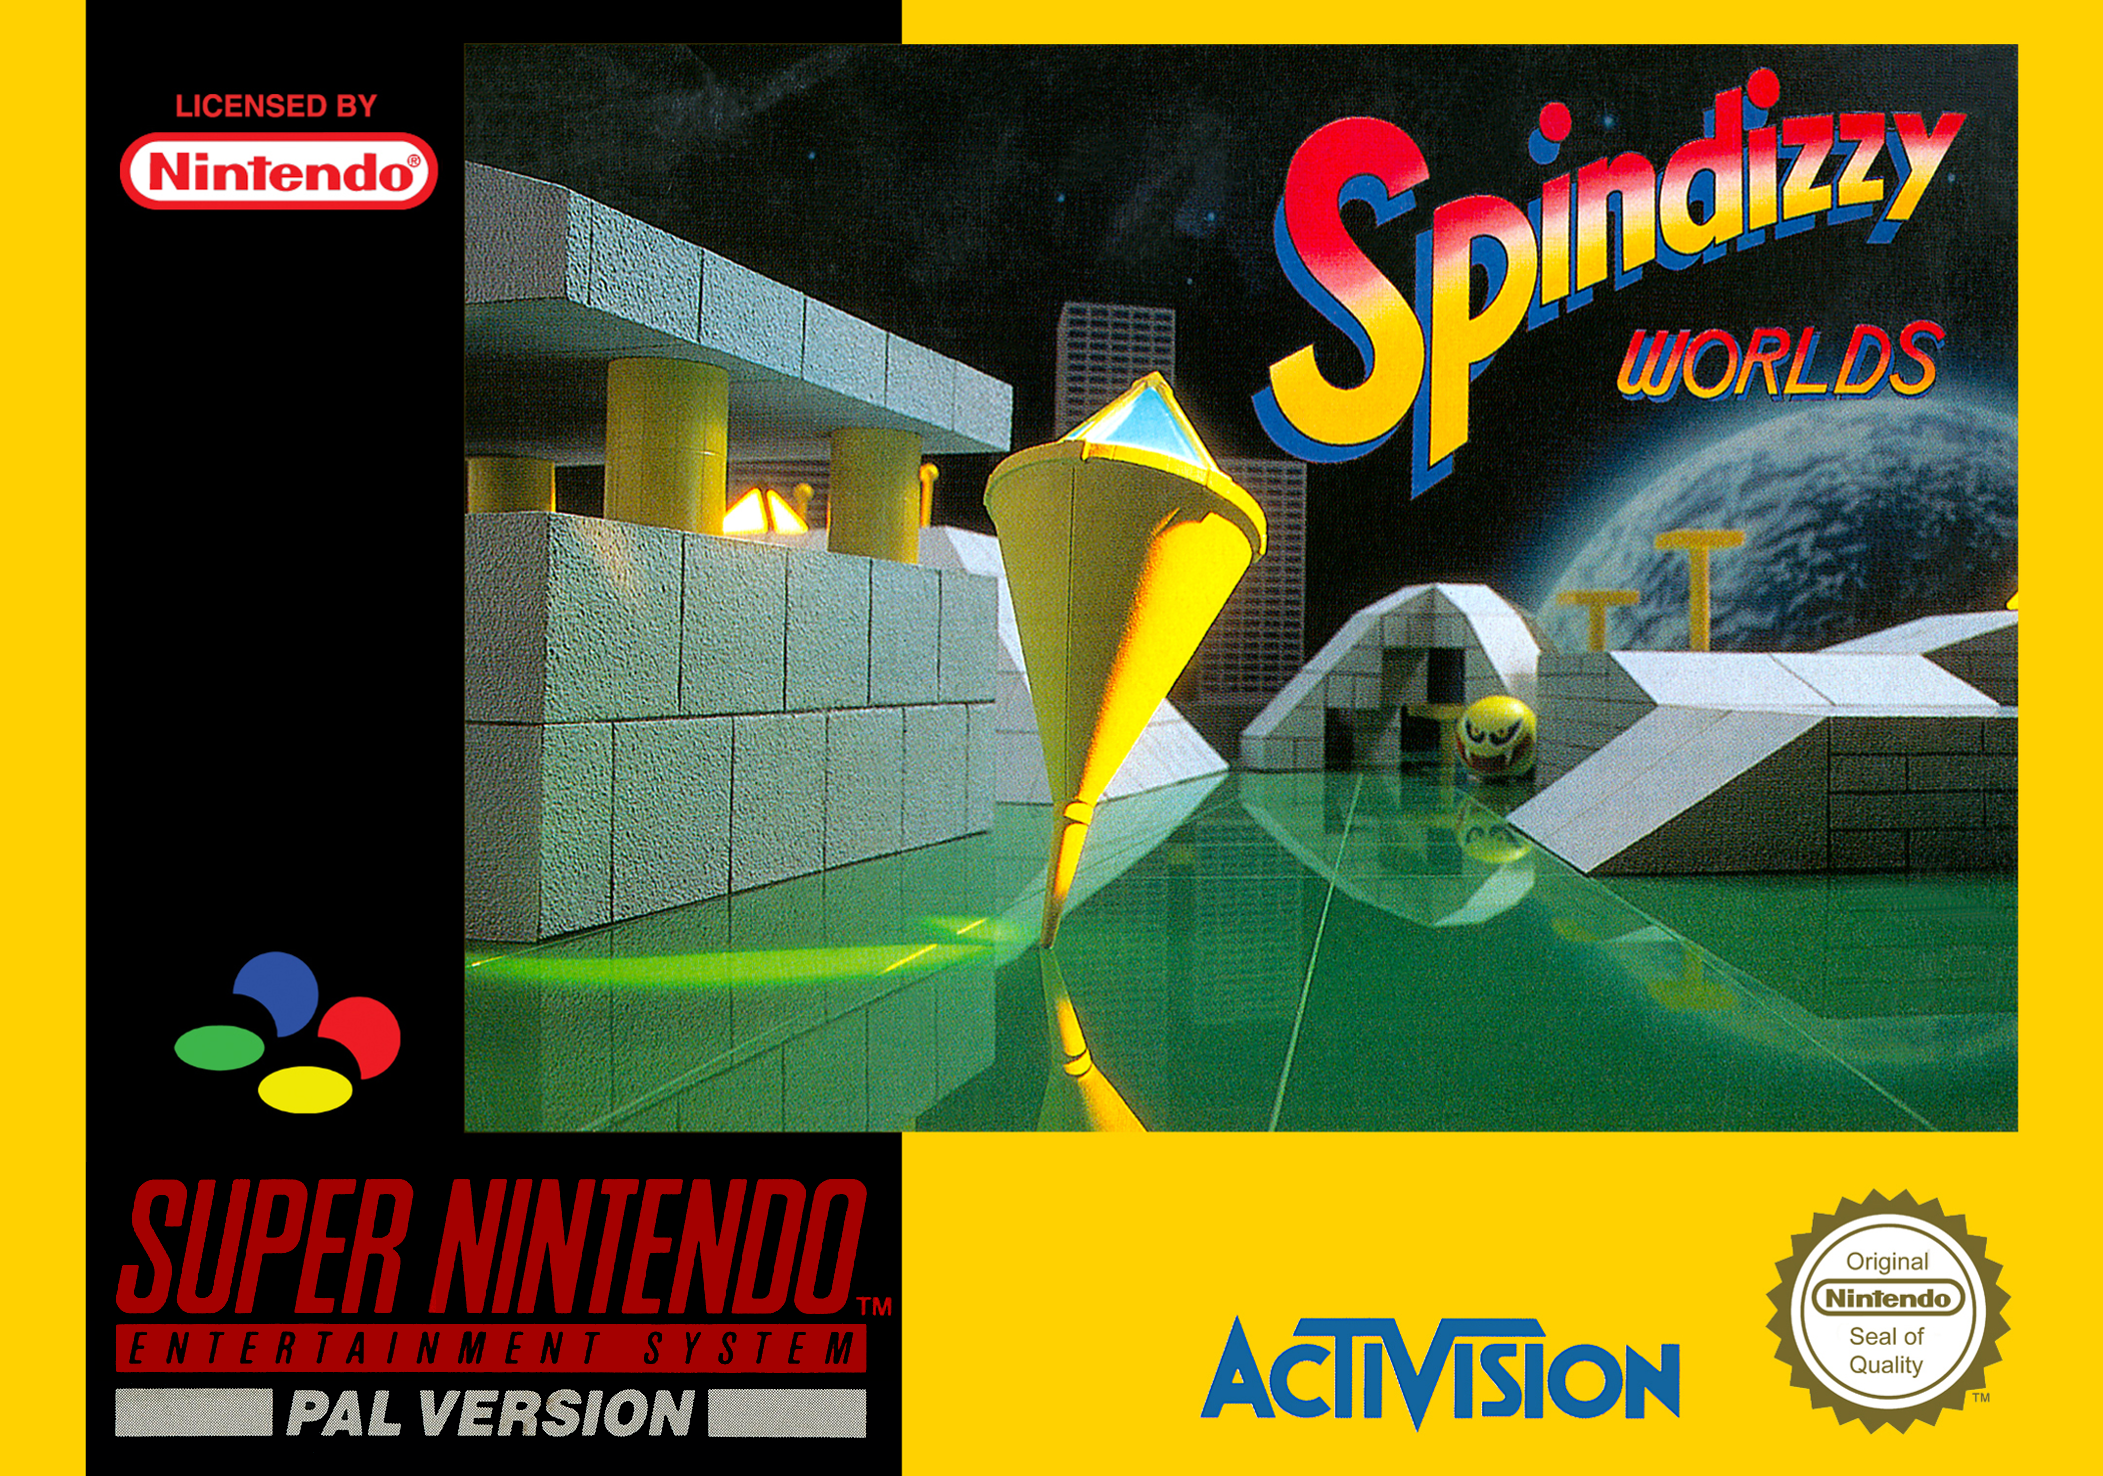 Game | Super Nintendo SNES | Spindizzy Worlds